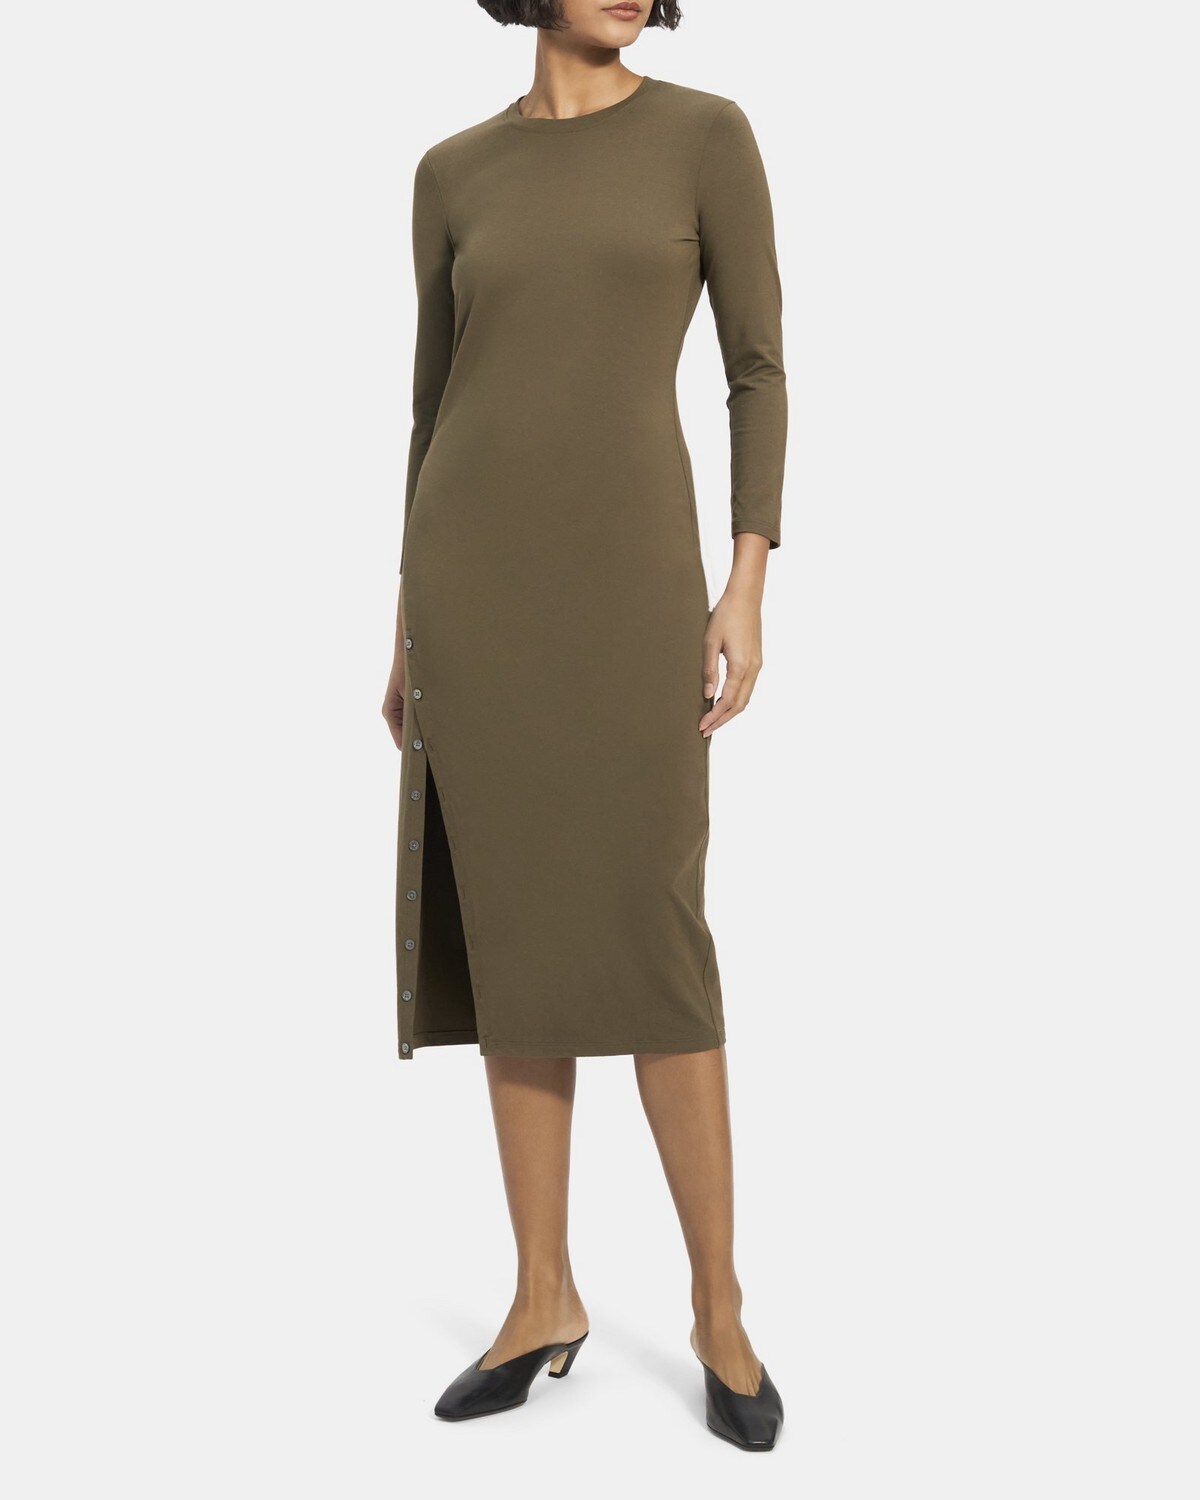 Button-Hem Long-Sleeve Dress in Modal Cotton